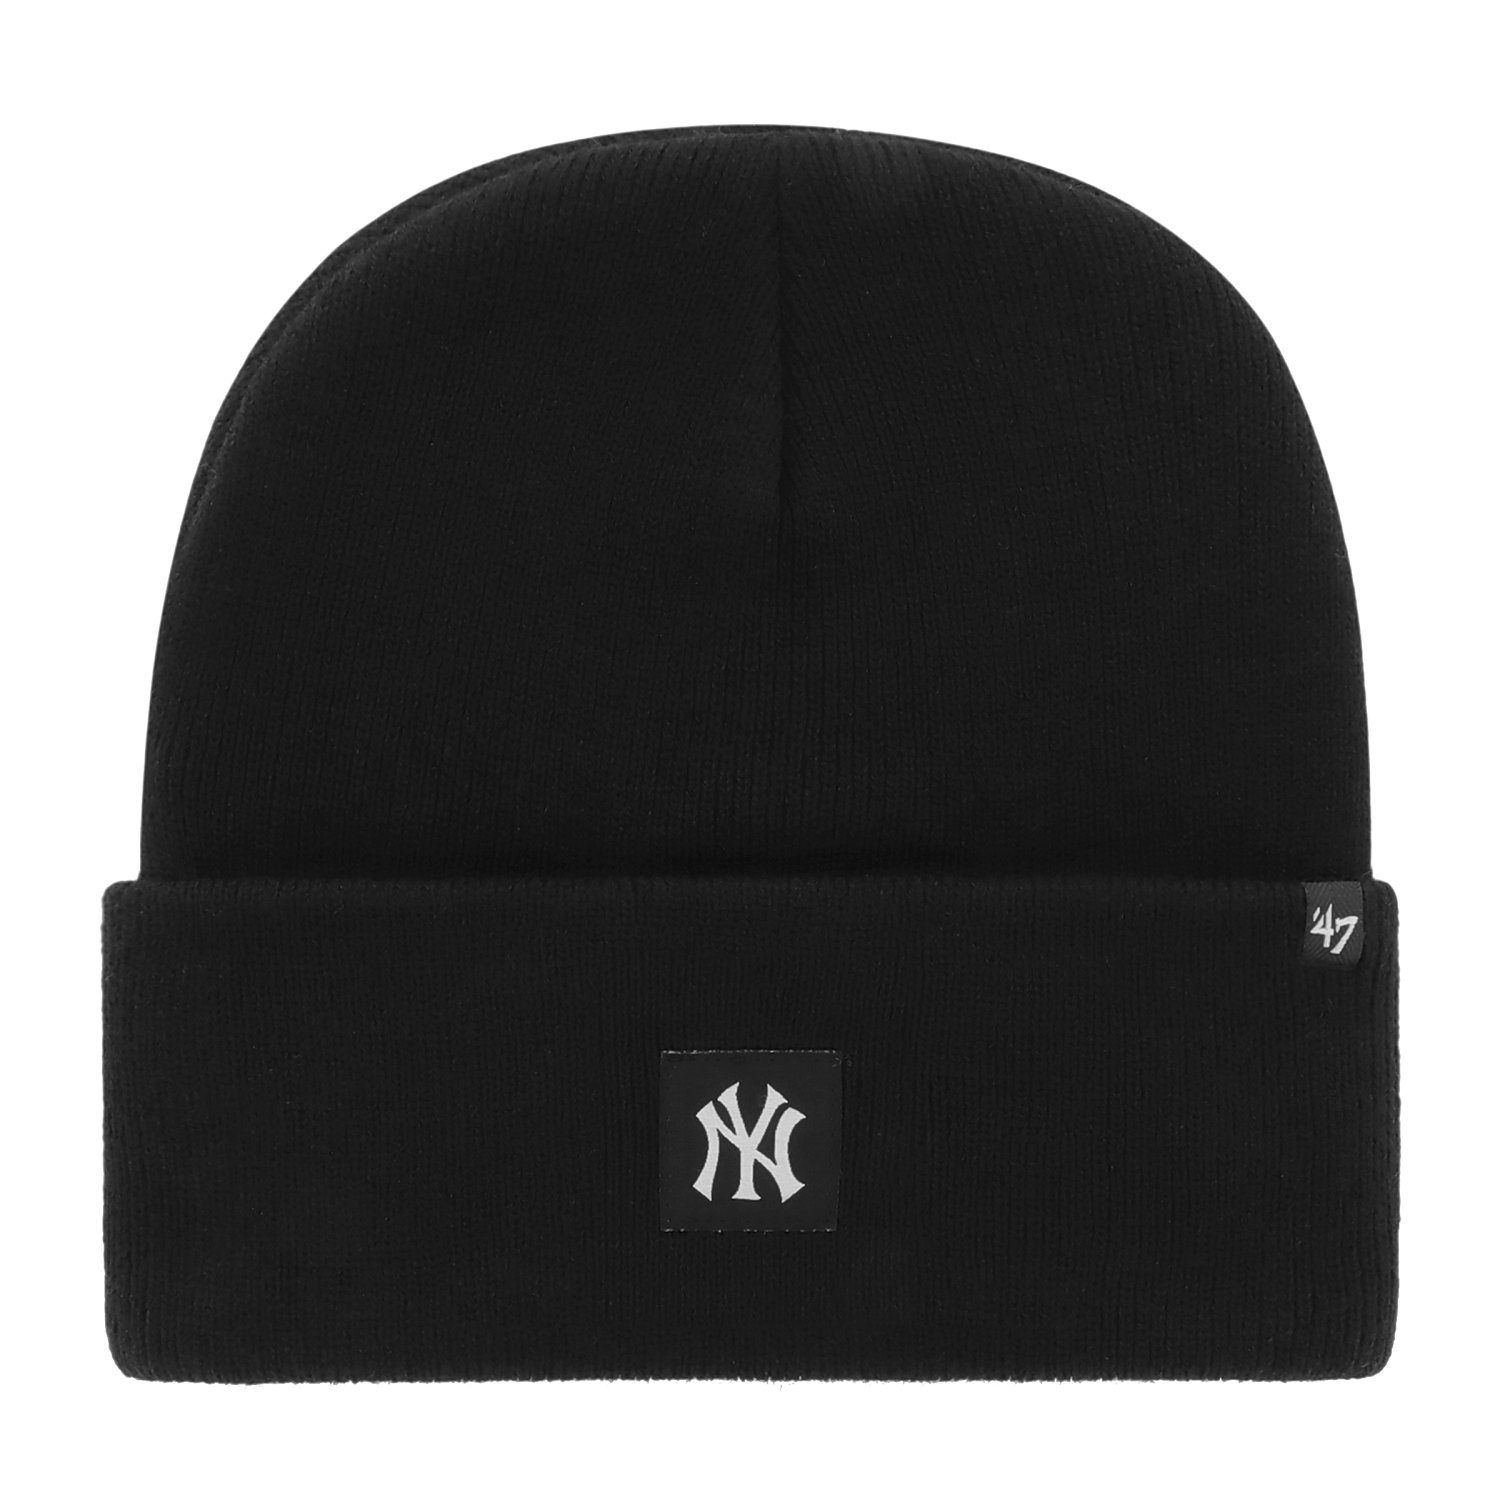 York New COMPACT Brand Fleecemütze Yankees '47